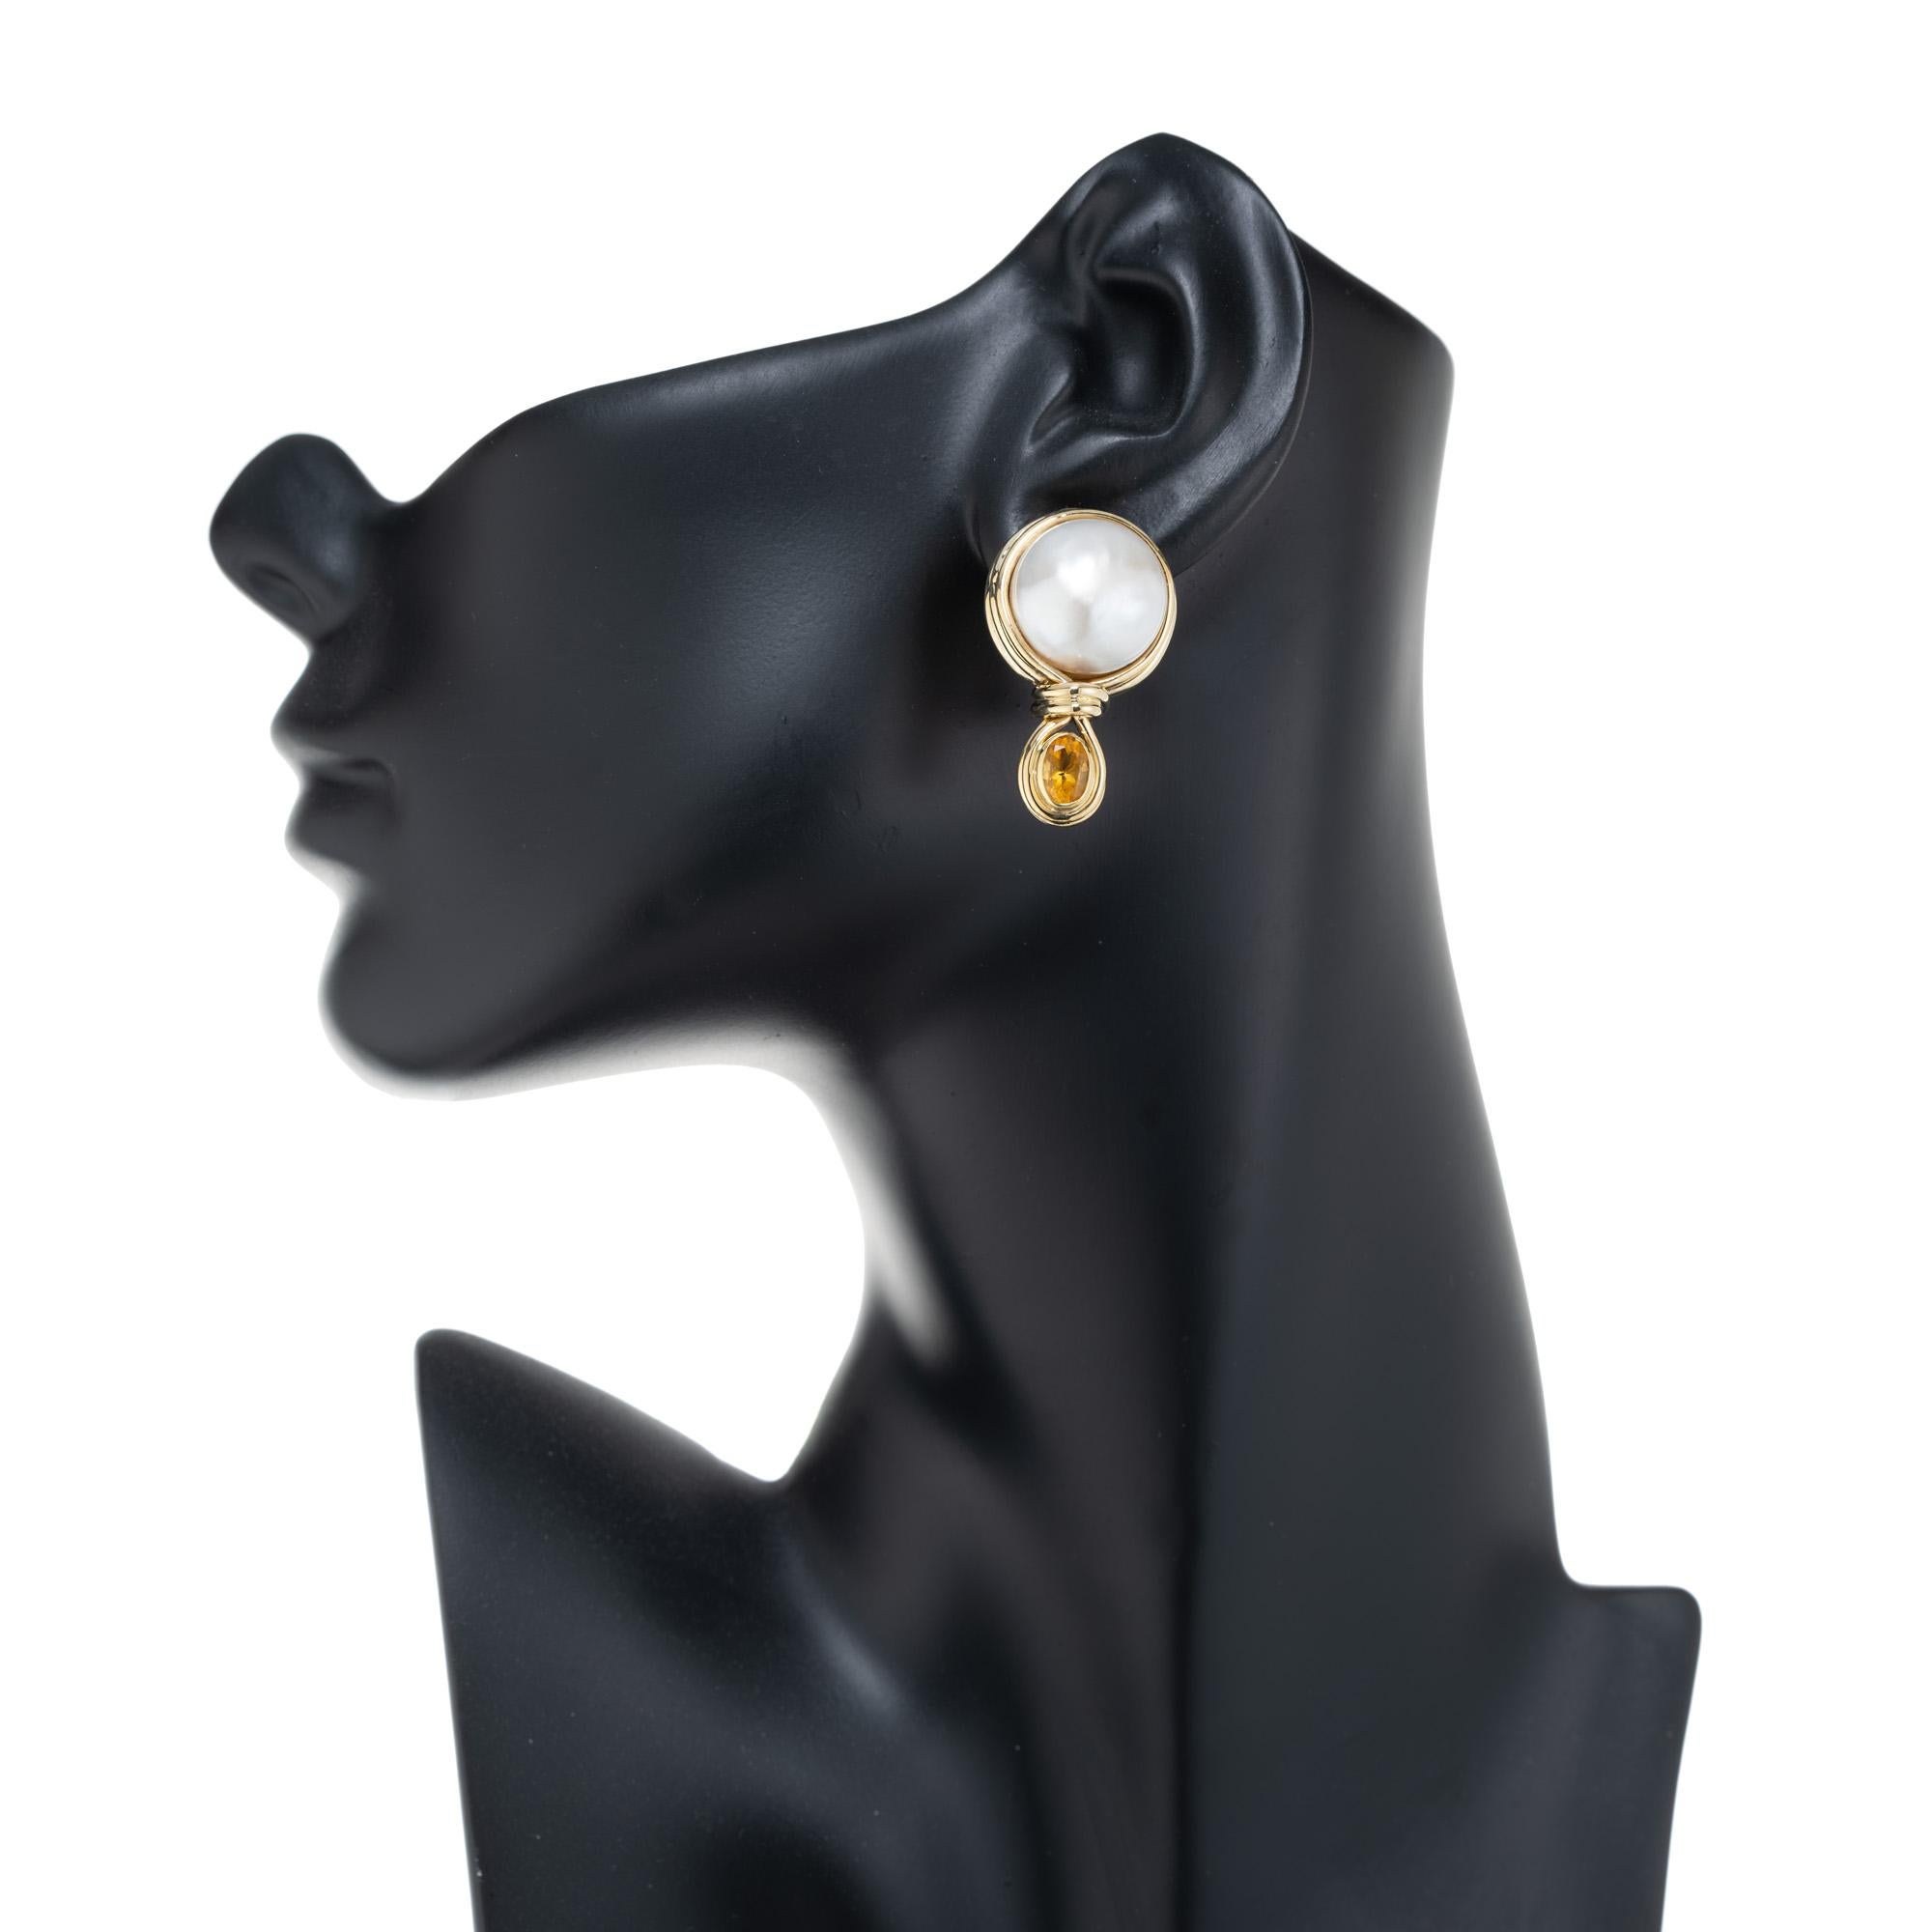 mabe pearl drop earrings